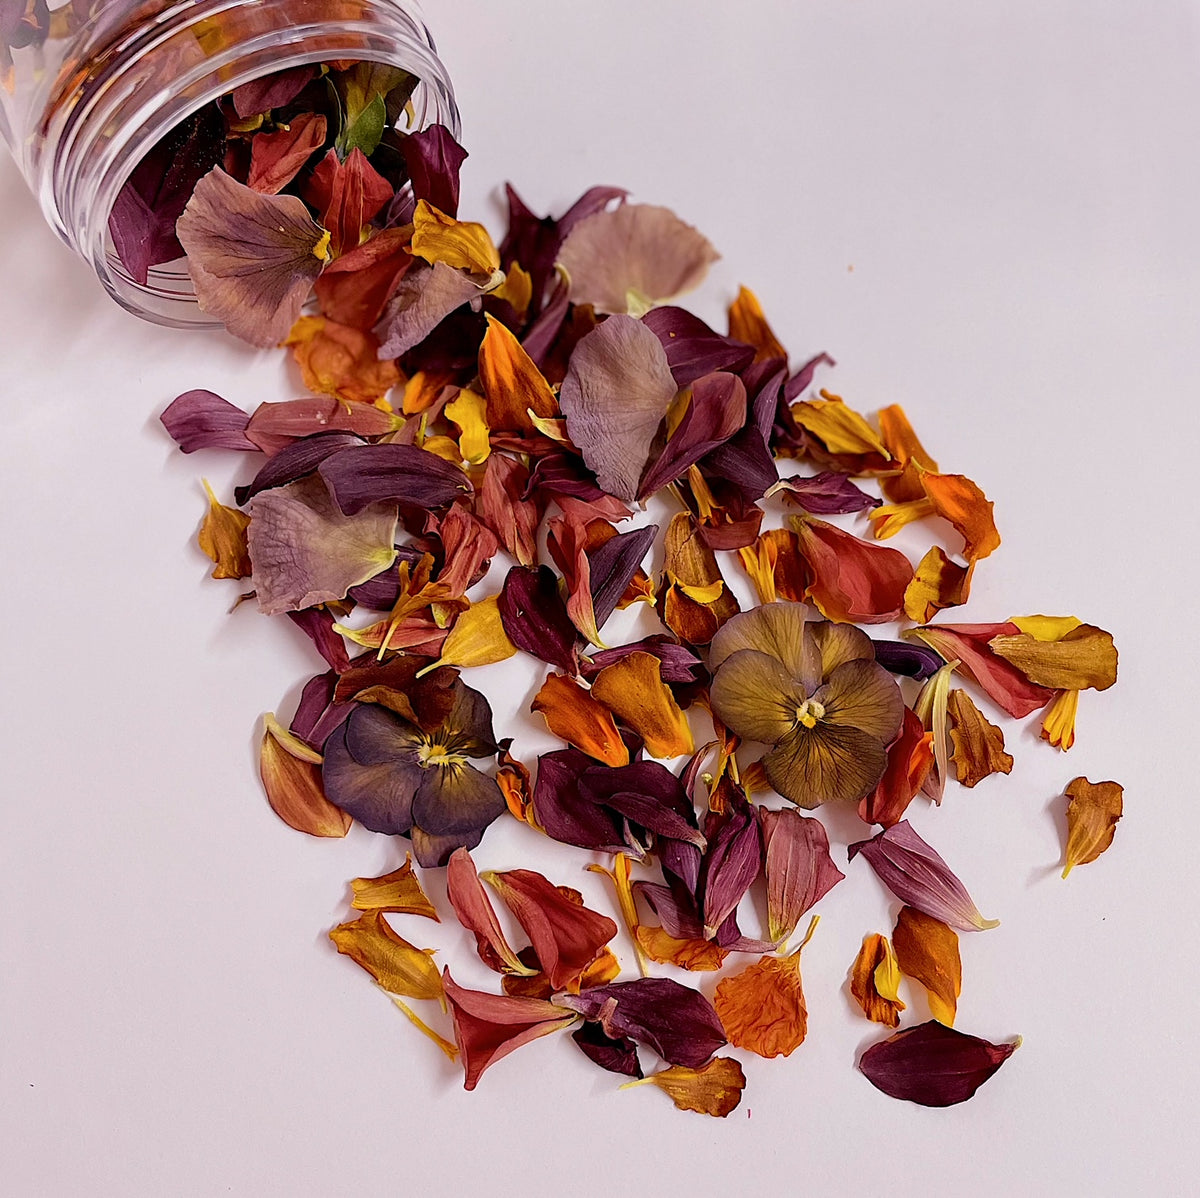 Chocolate Dream Flowerfetti®- Dried Edible Flower Confetti by